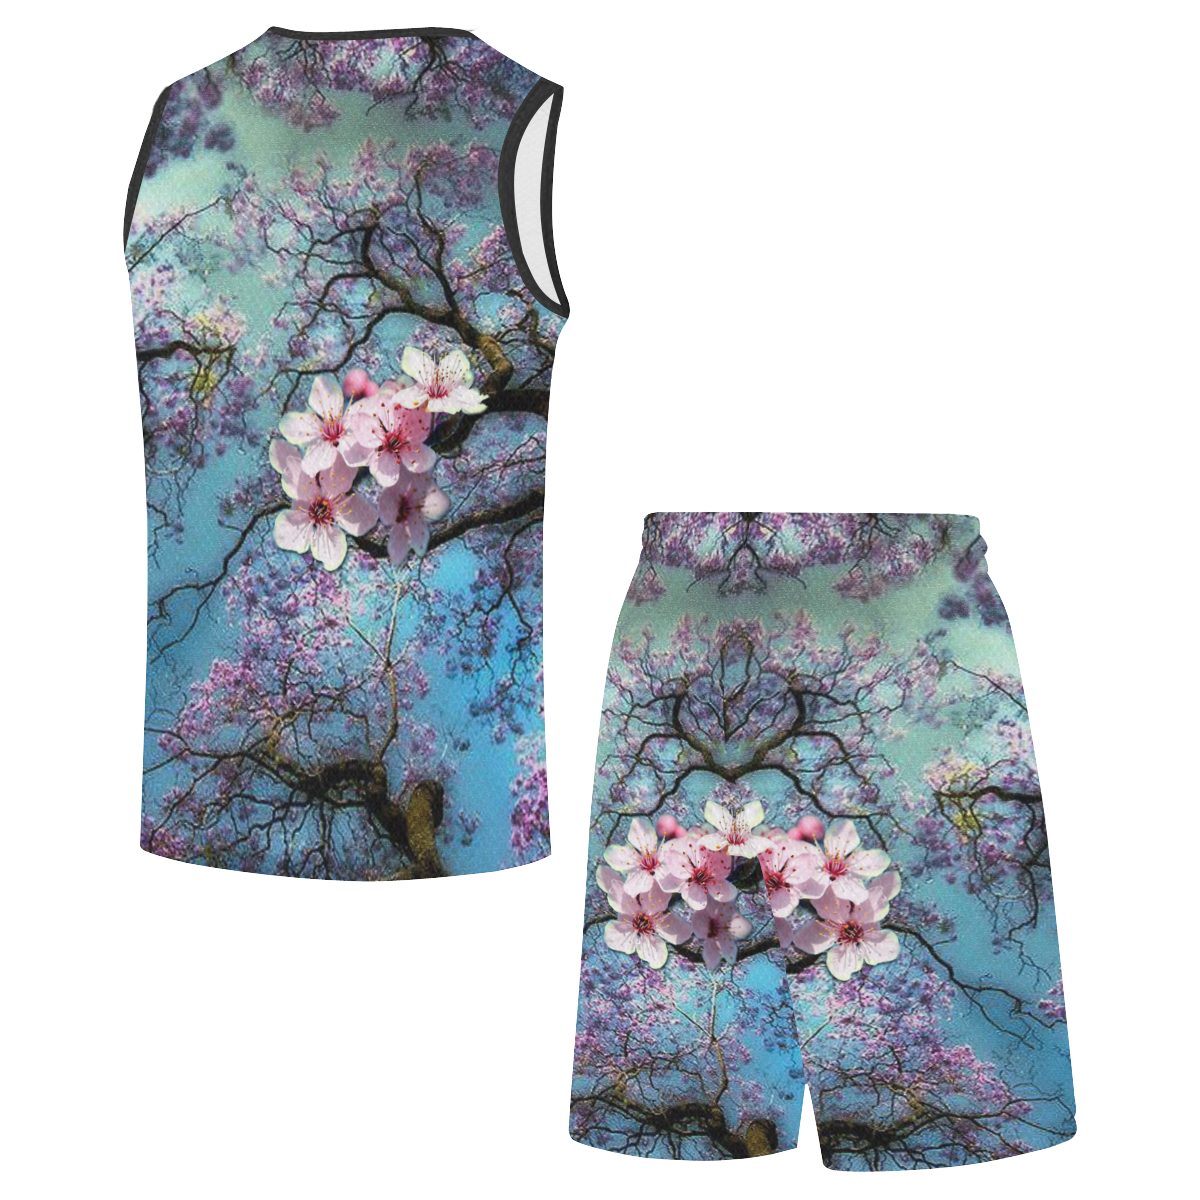 Cherry blossomL All Over Print Basketball Uniform